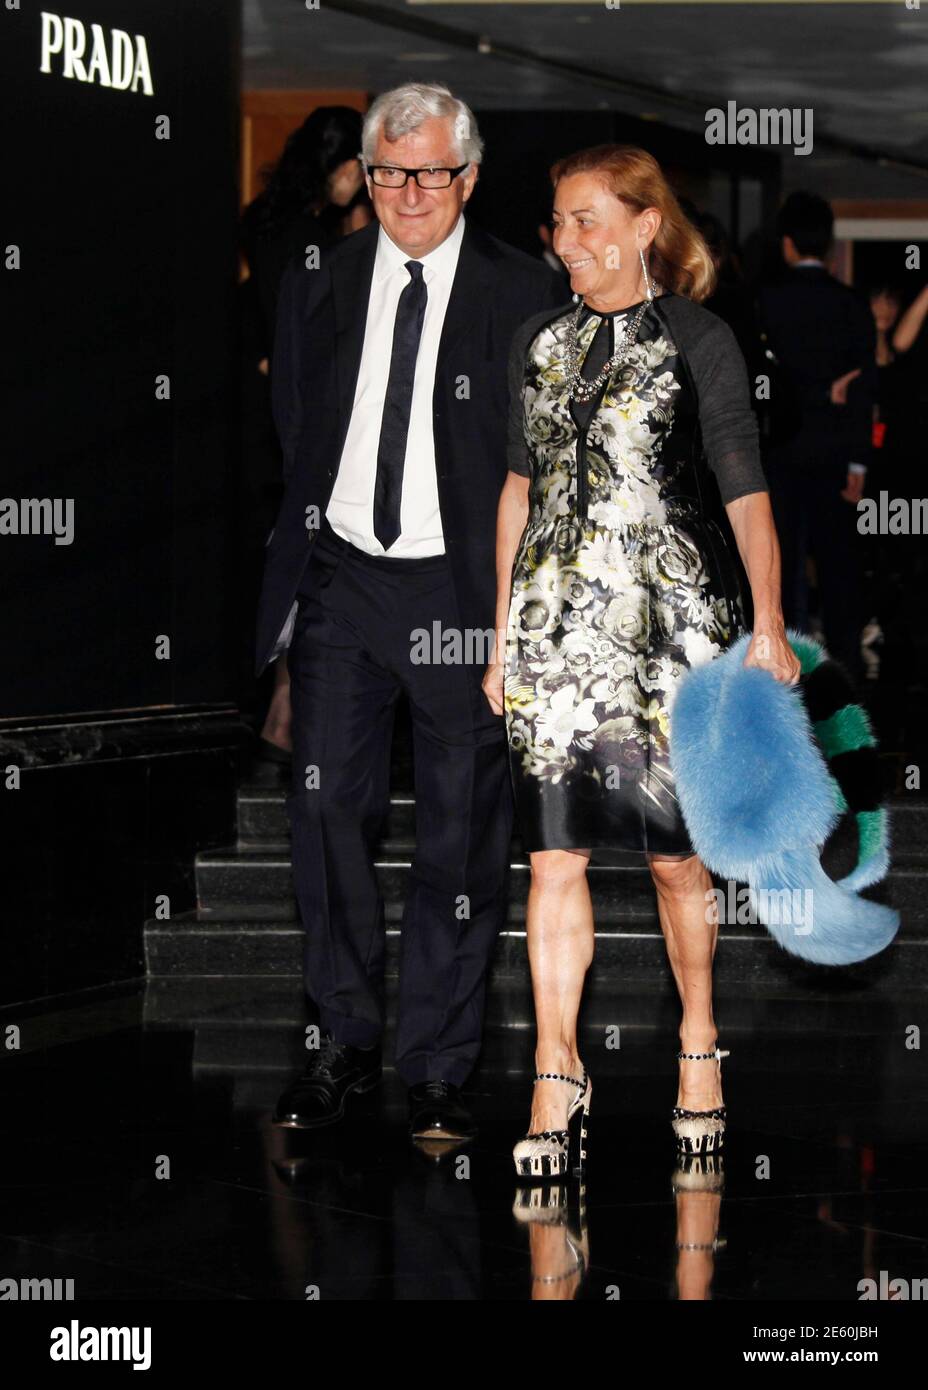 Italian fashion designer Miuccia Prada and her husband Patrizio Bertelli,  also Prada's chief executive, walk past a Prada logo during an investors  launching presentation ahead of Prada's IPO in Hong Kong June